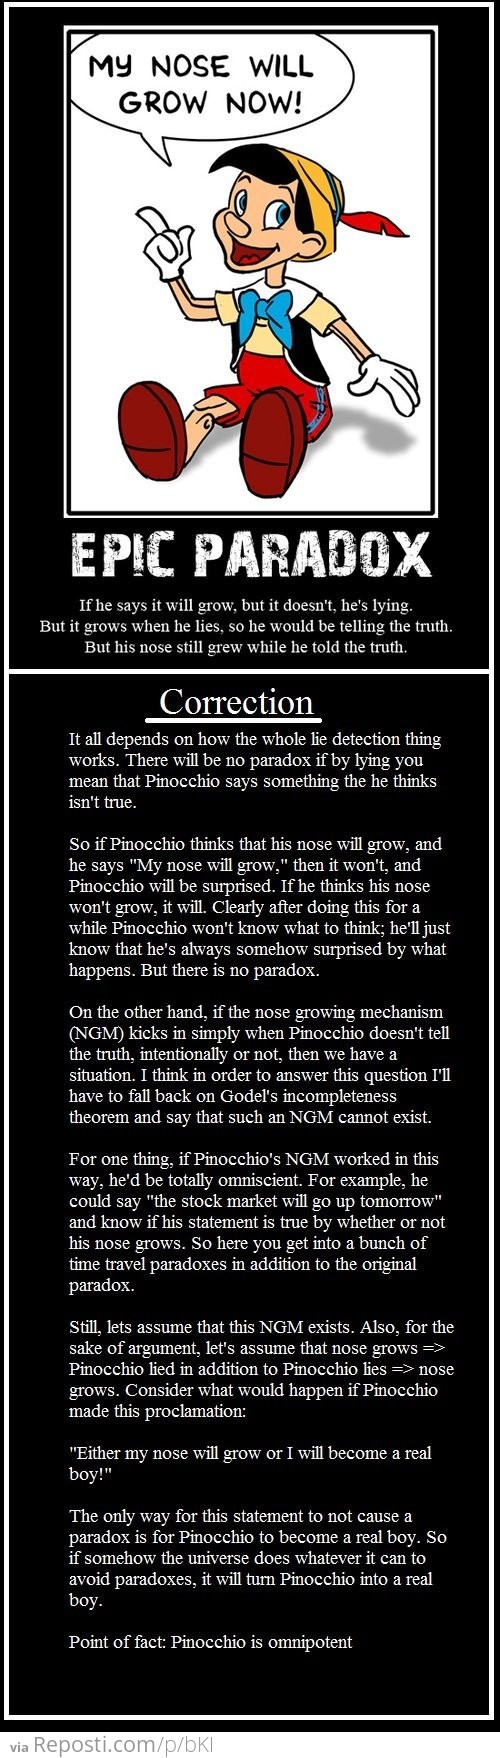 Pinocchio Paradox